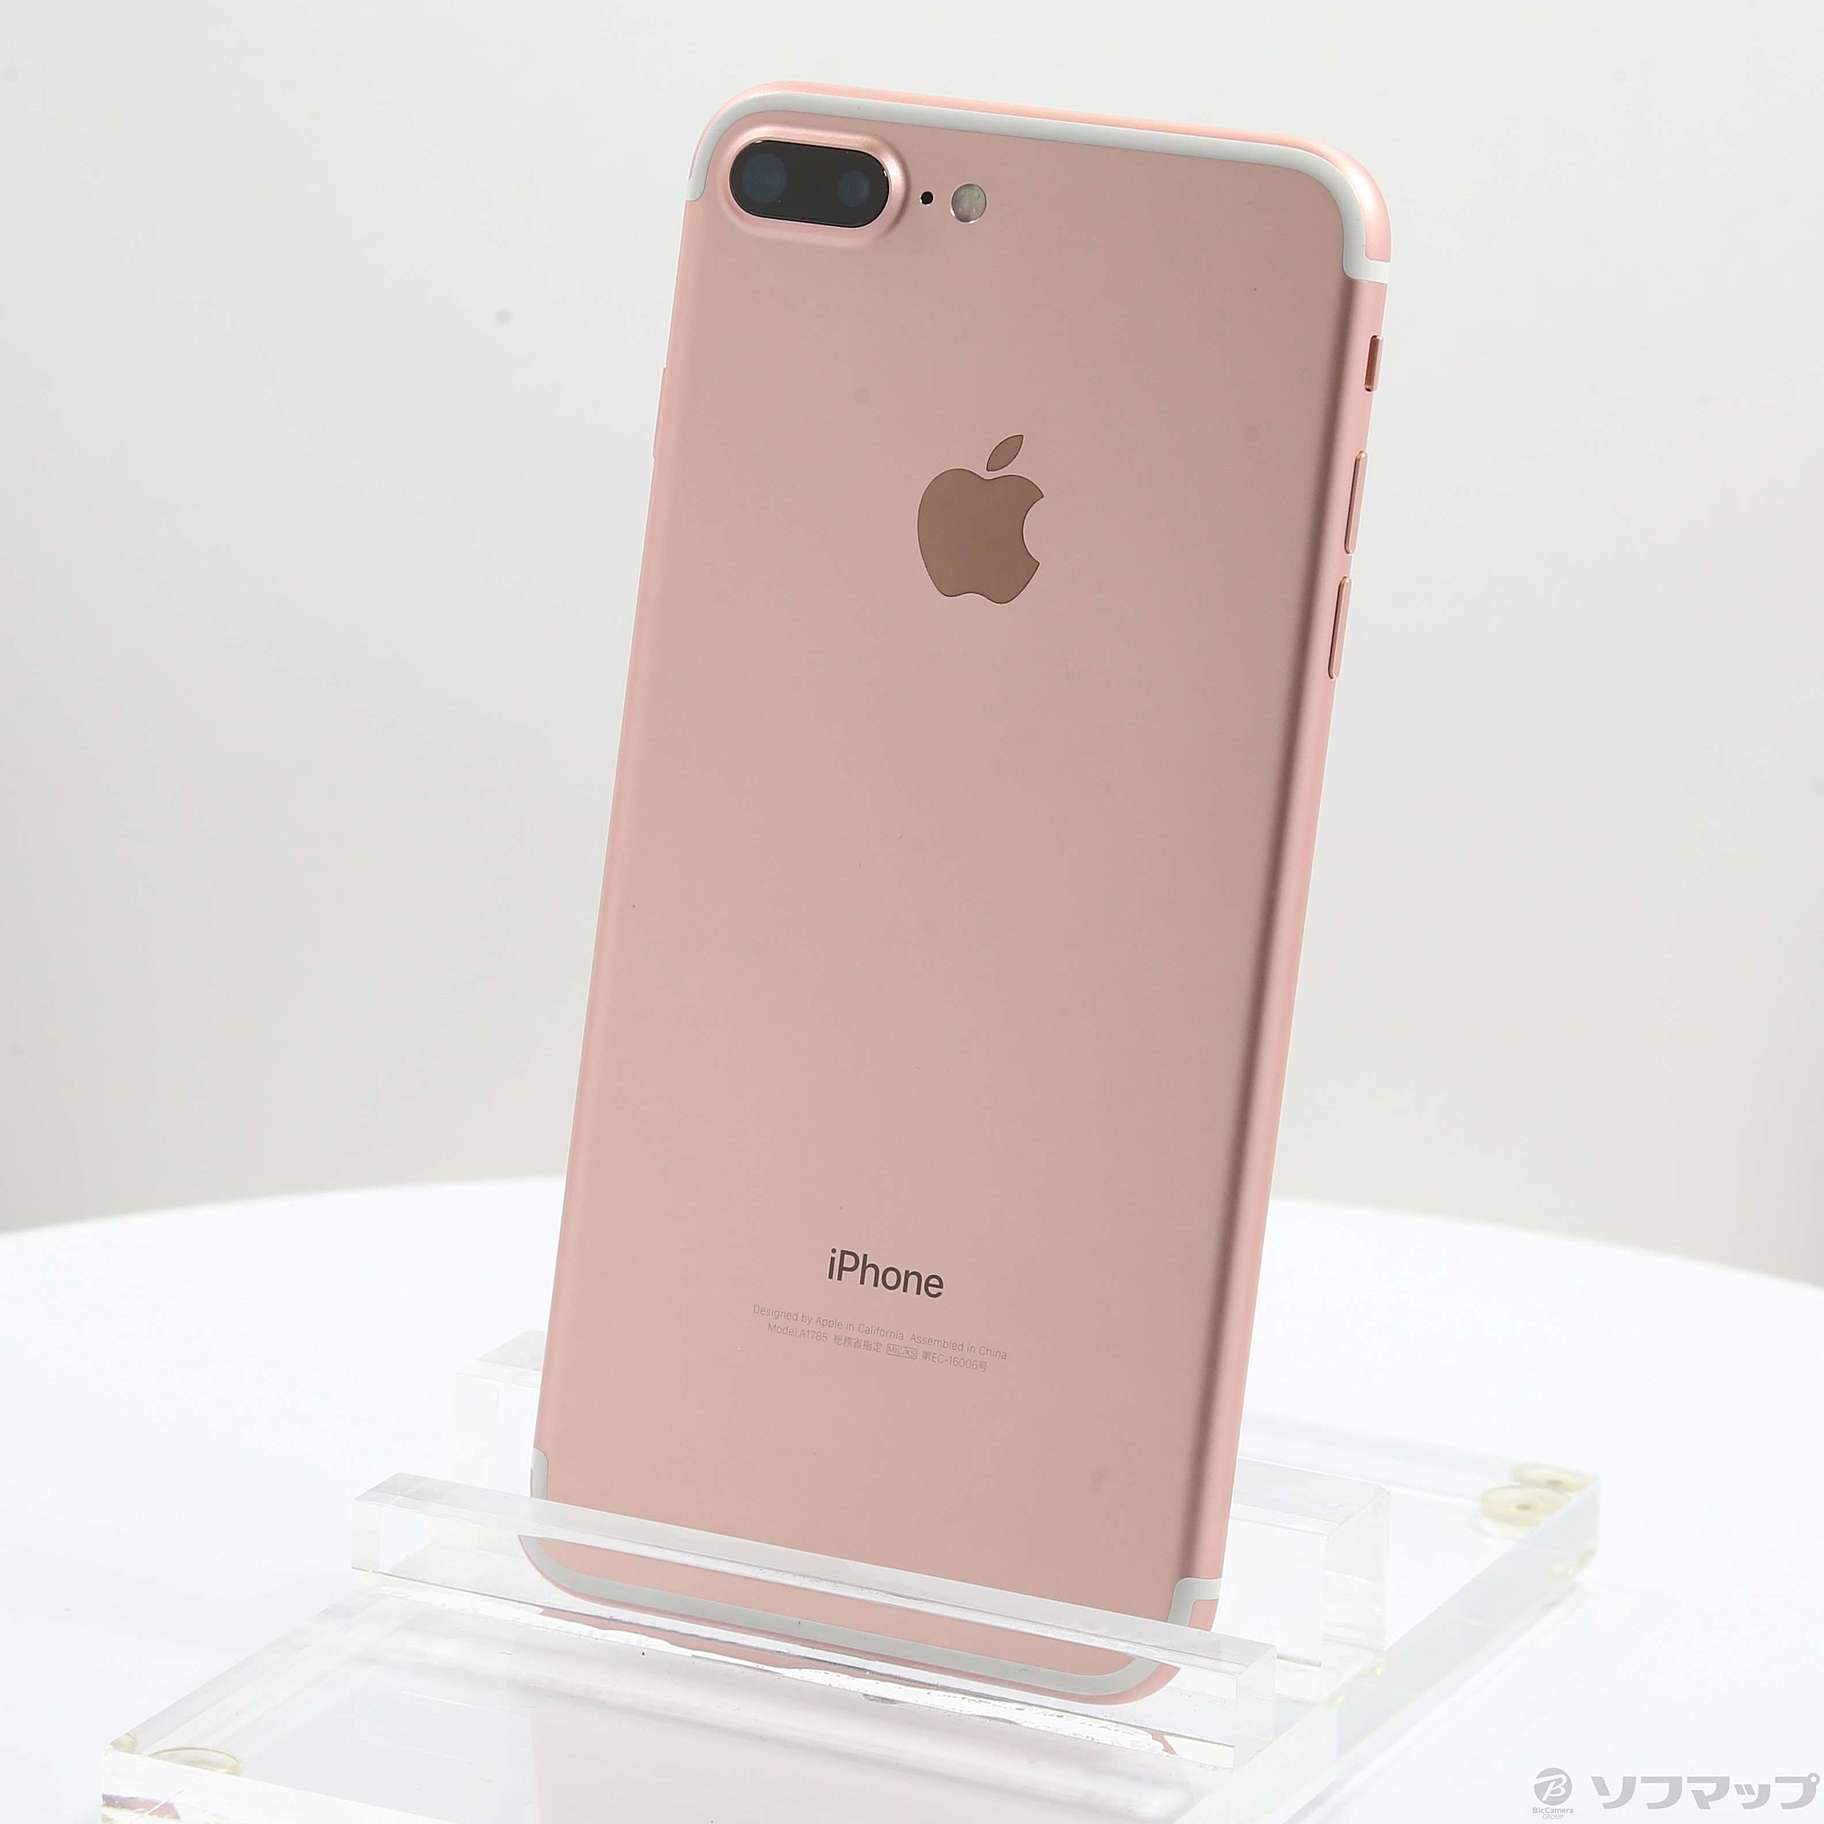 iPhone 7 Plus Gold 32 GB Softbank - スマートフォン本体